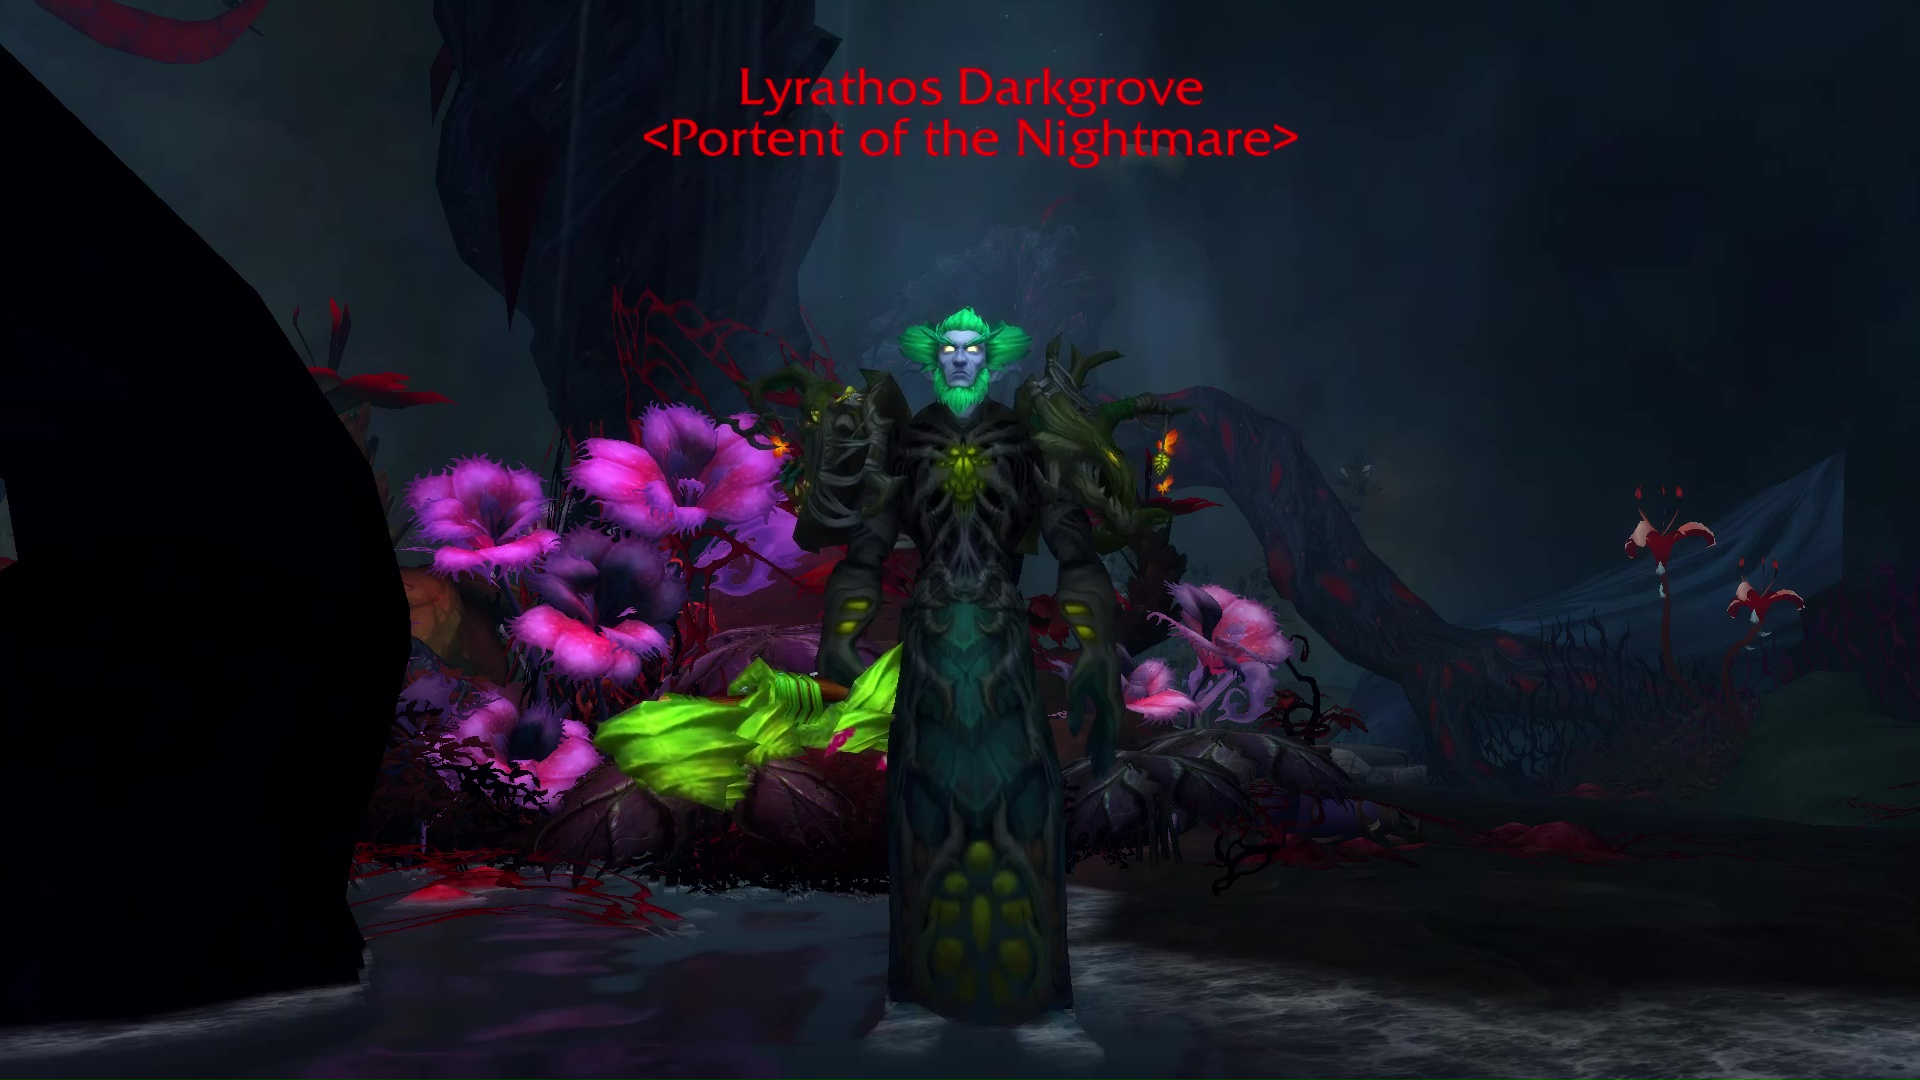 lyrathos darkgrove